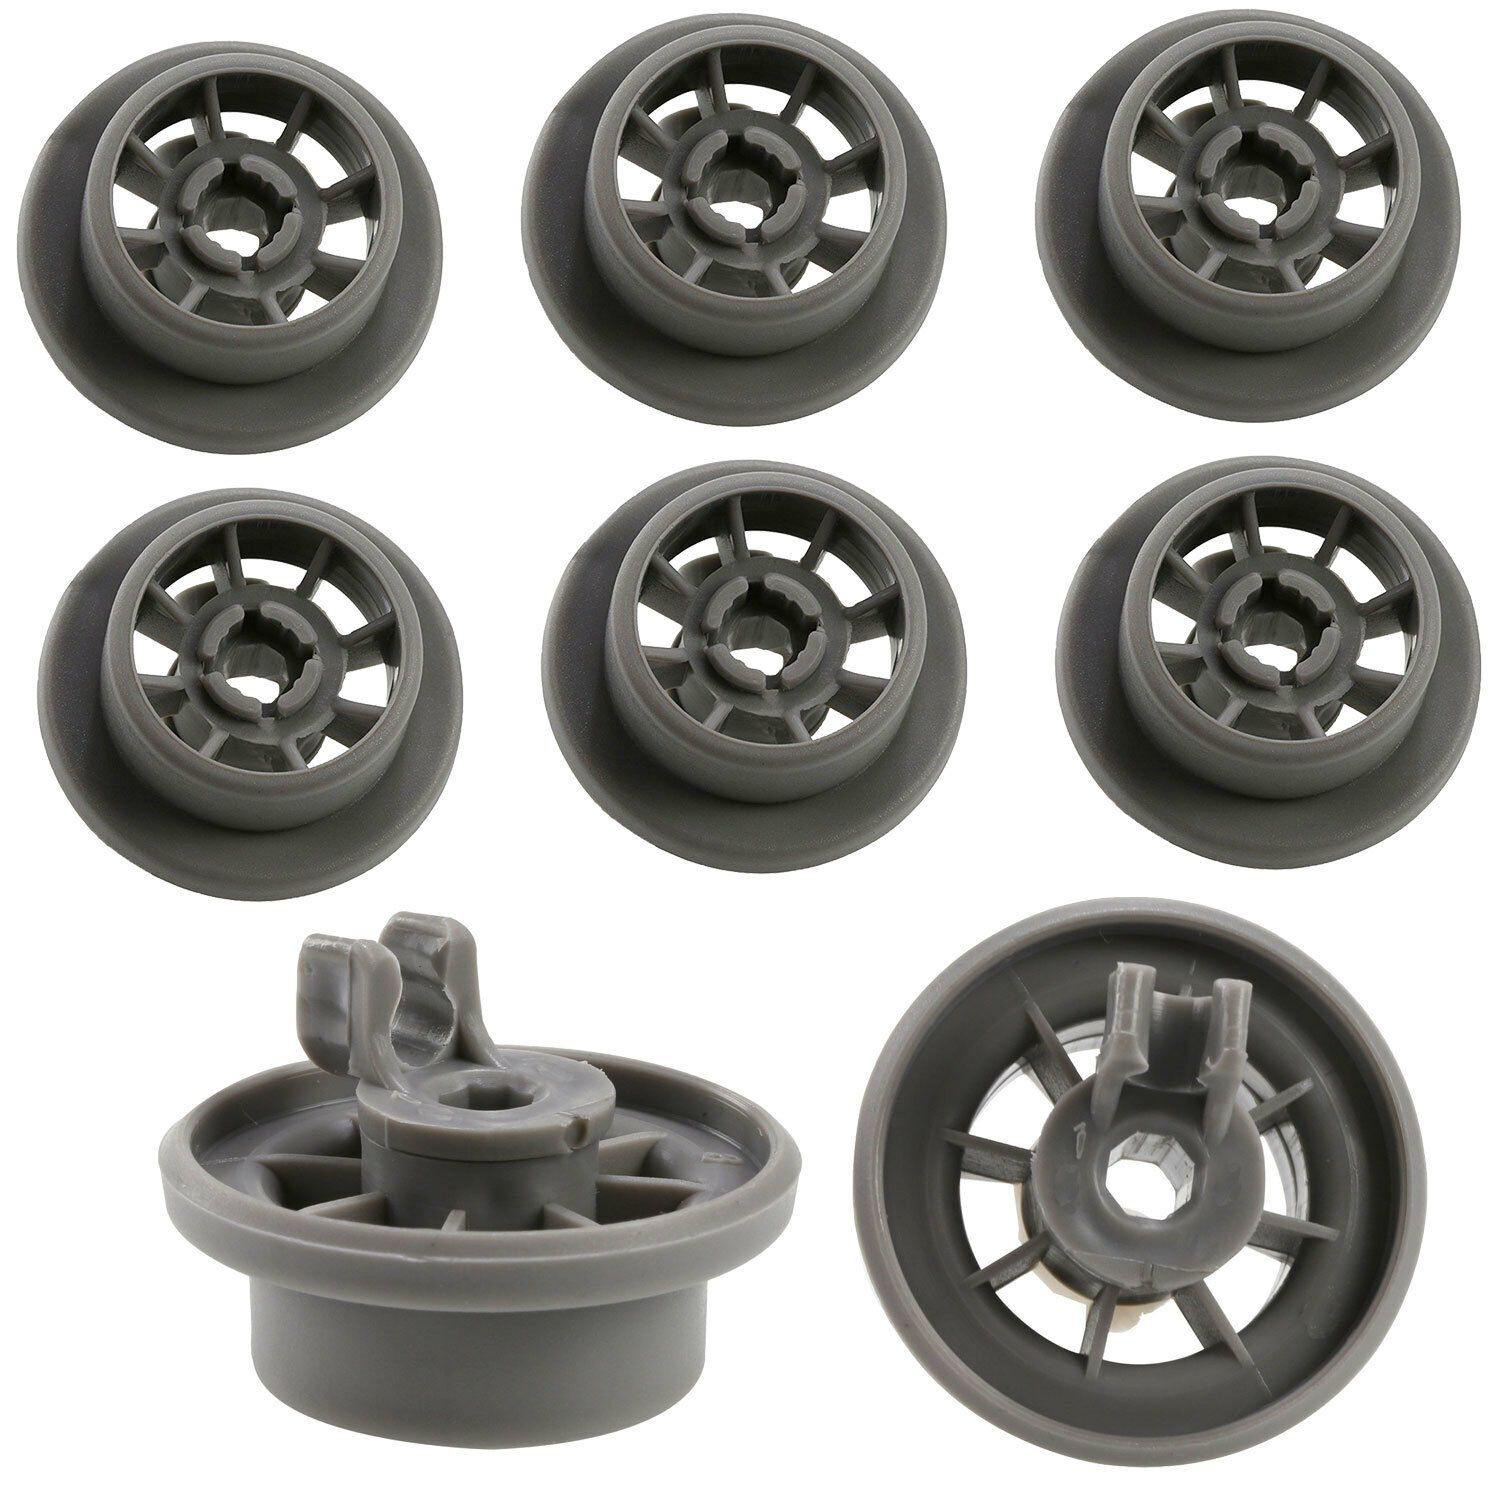 8 X Diswasher Lower Bakset Wheels For Bosch 165314 AH3439123 PS3439123 420198 Sparesbarn